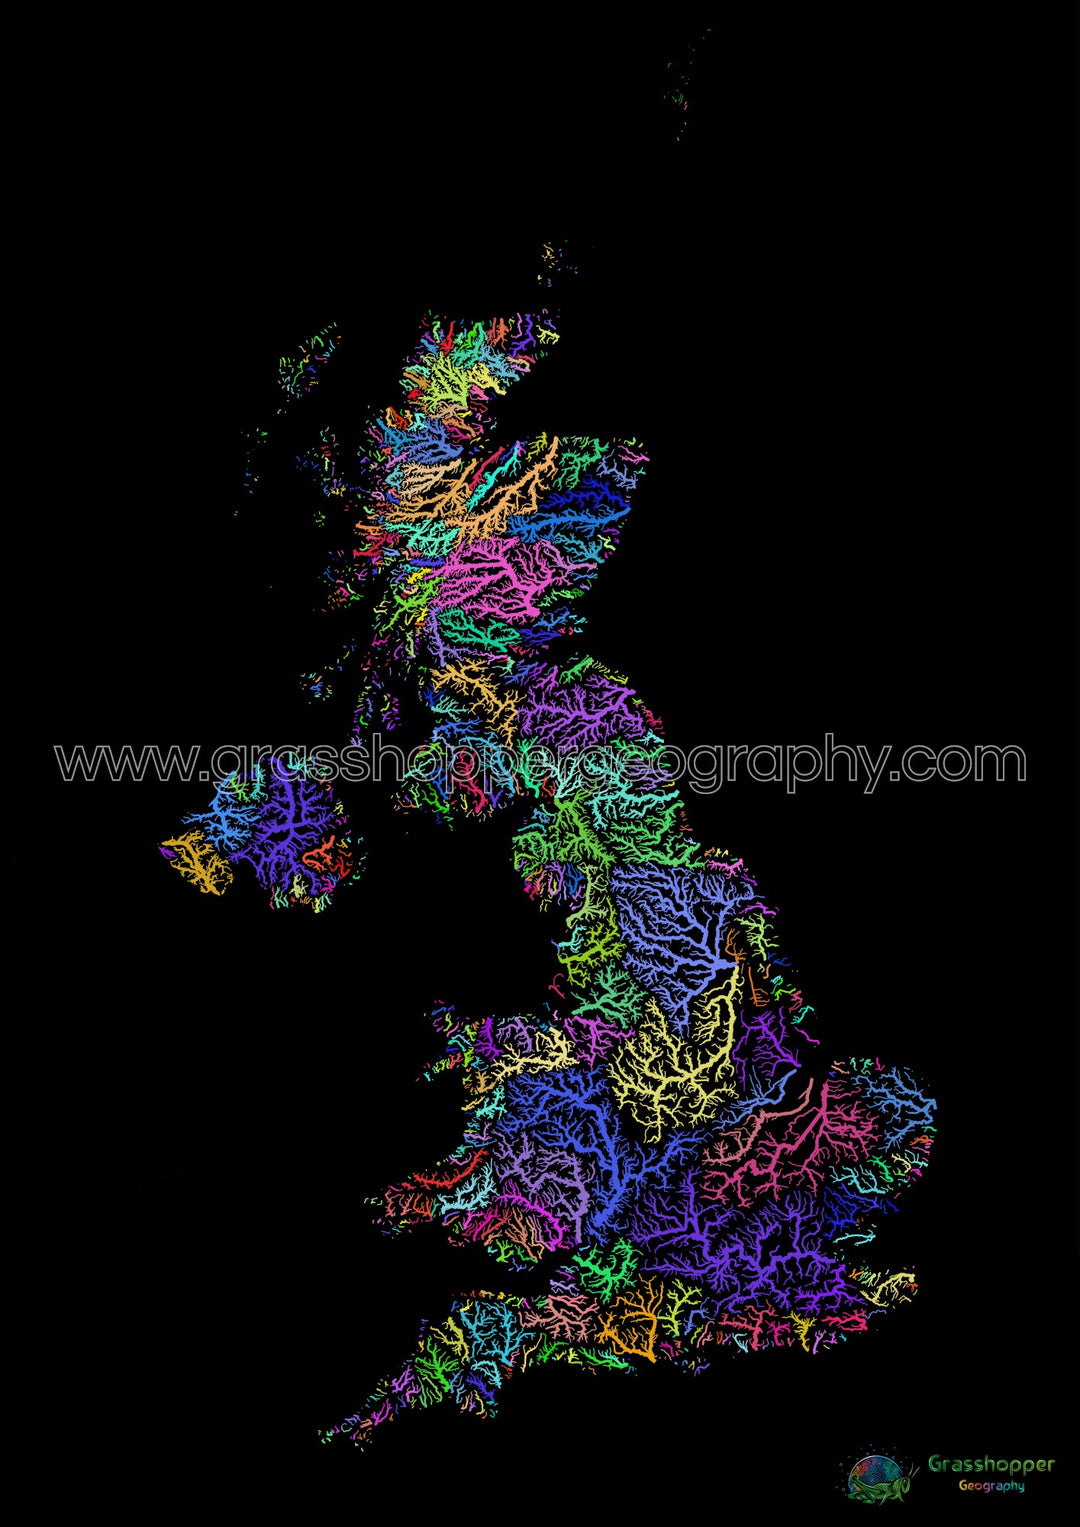 The United Kingdom - River basin map, rainbow on black - Fine Art Print